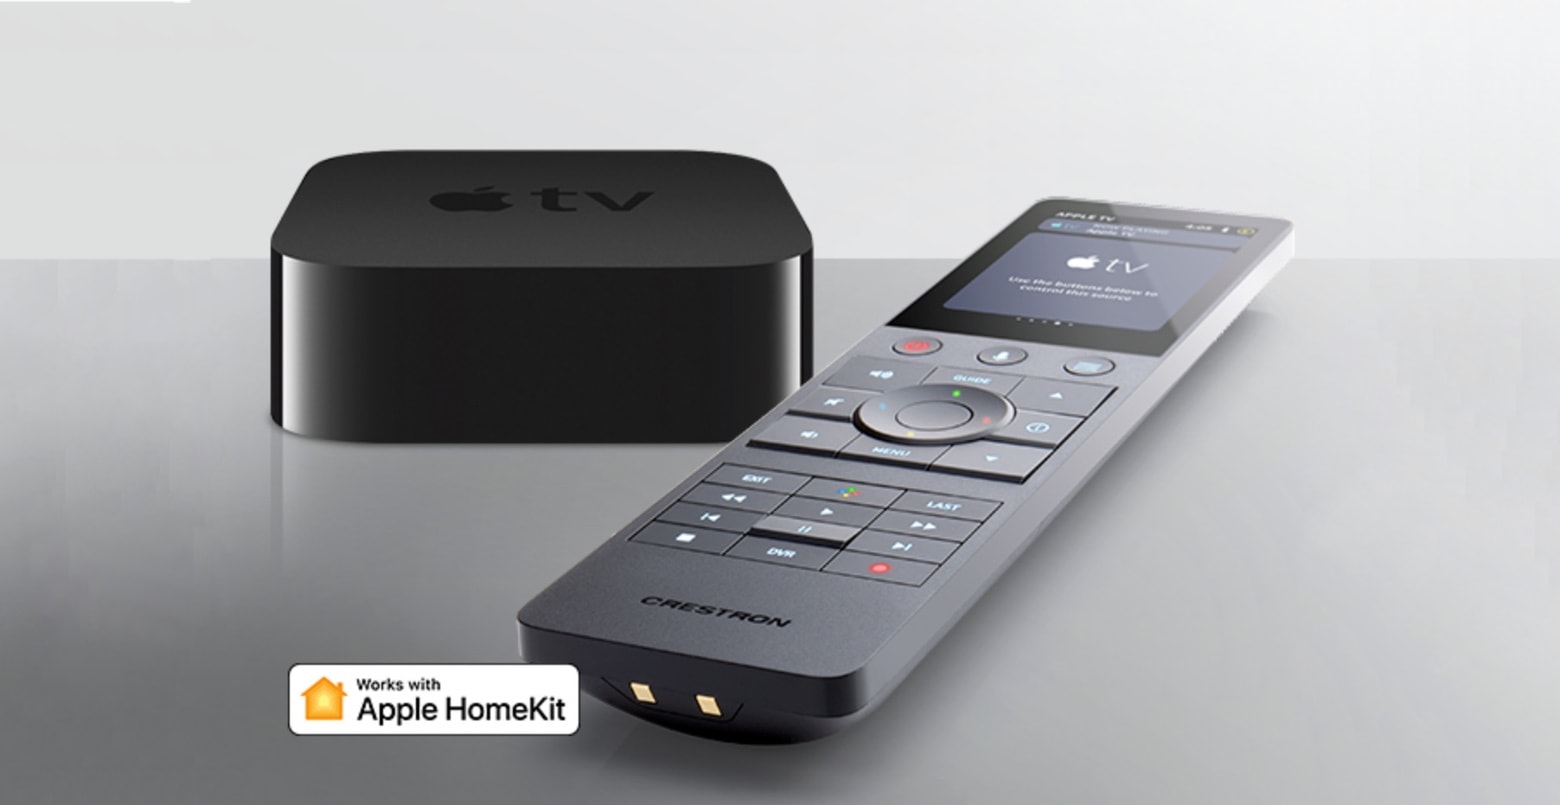 Crestron remote and Apple TV